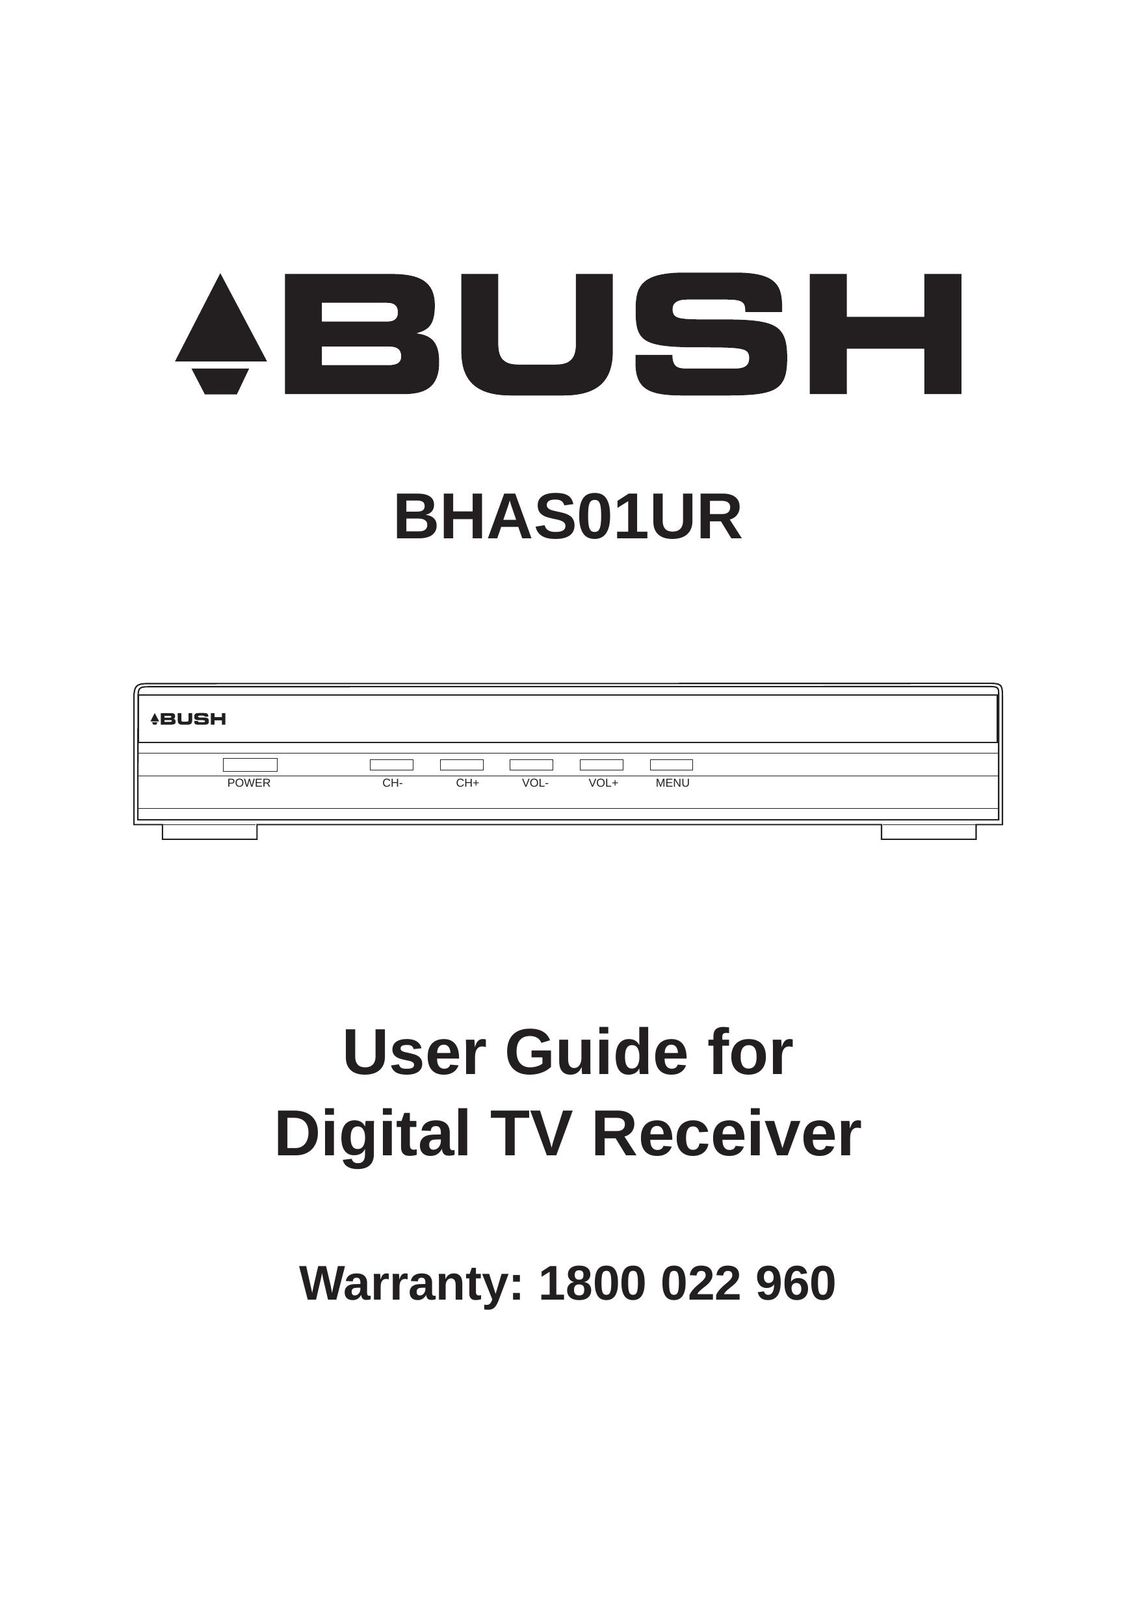 Bush BHAS01UR TV Receiver User Manual (Page 1)